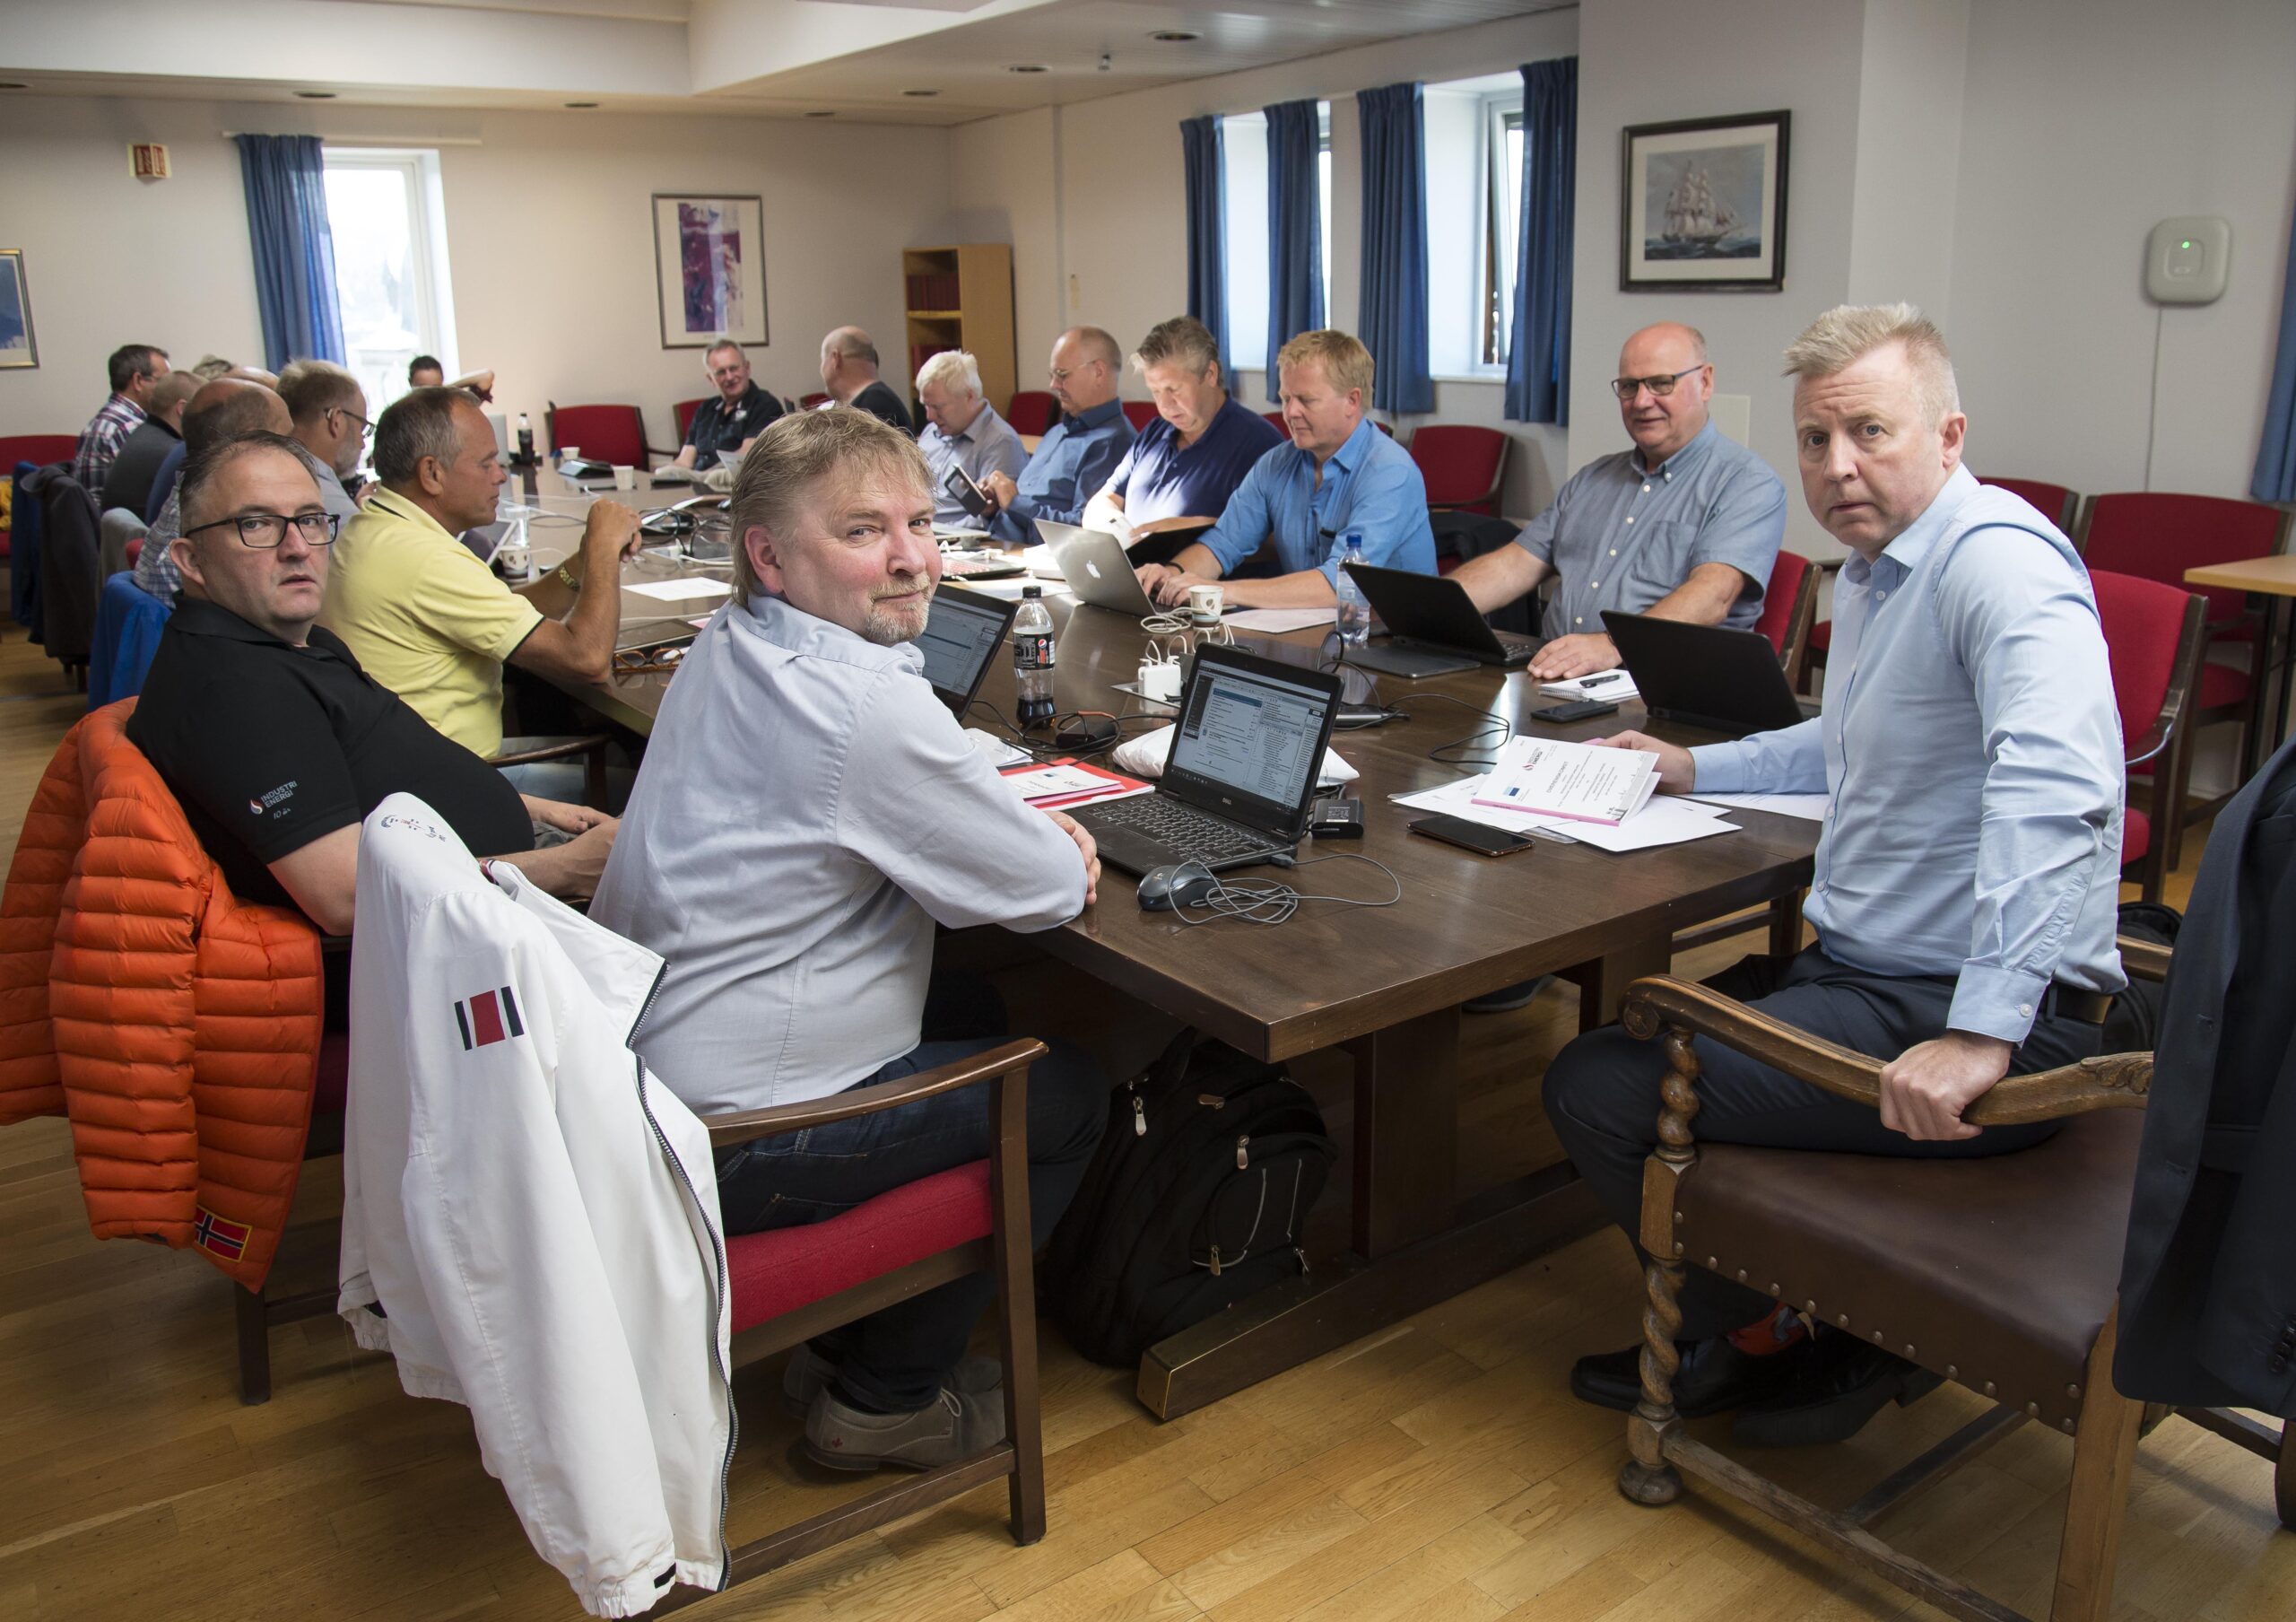 Industri Energis’ Negotiating team during mediation. Photo: Atle Espen Helgesen